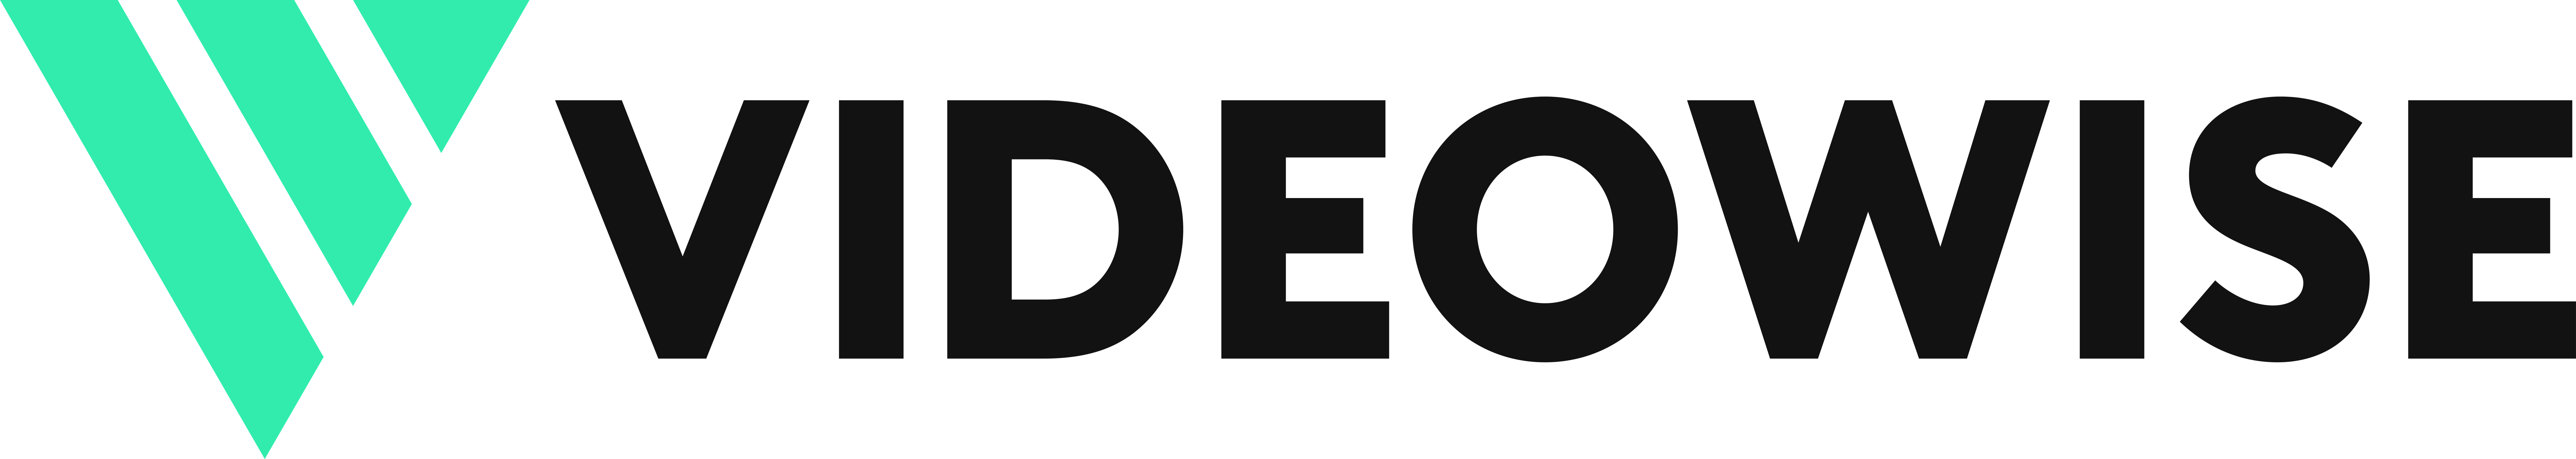 Videowise logo - black text